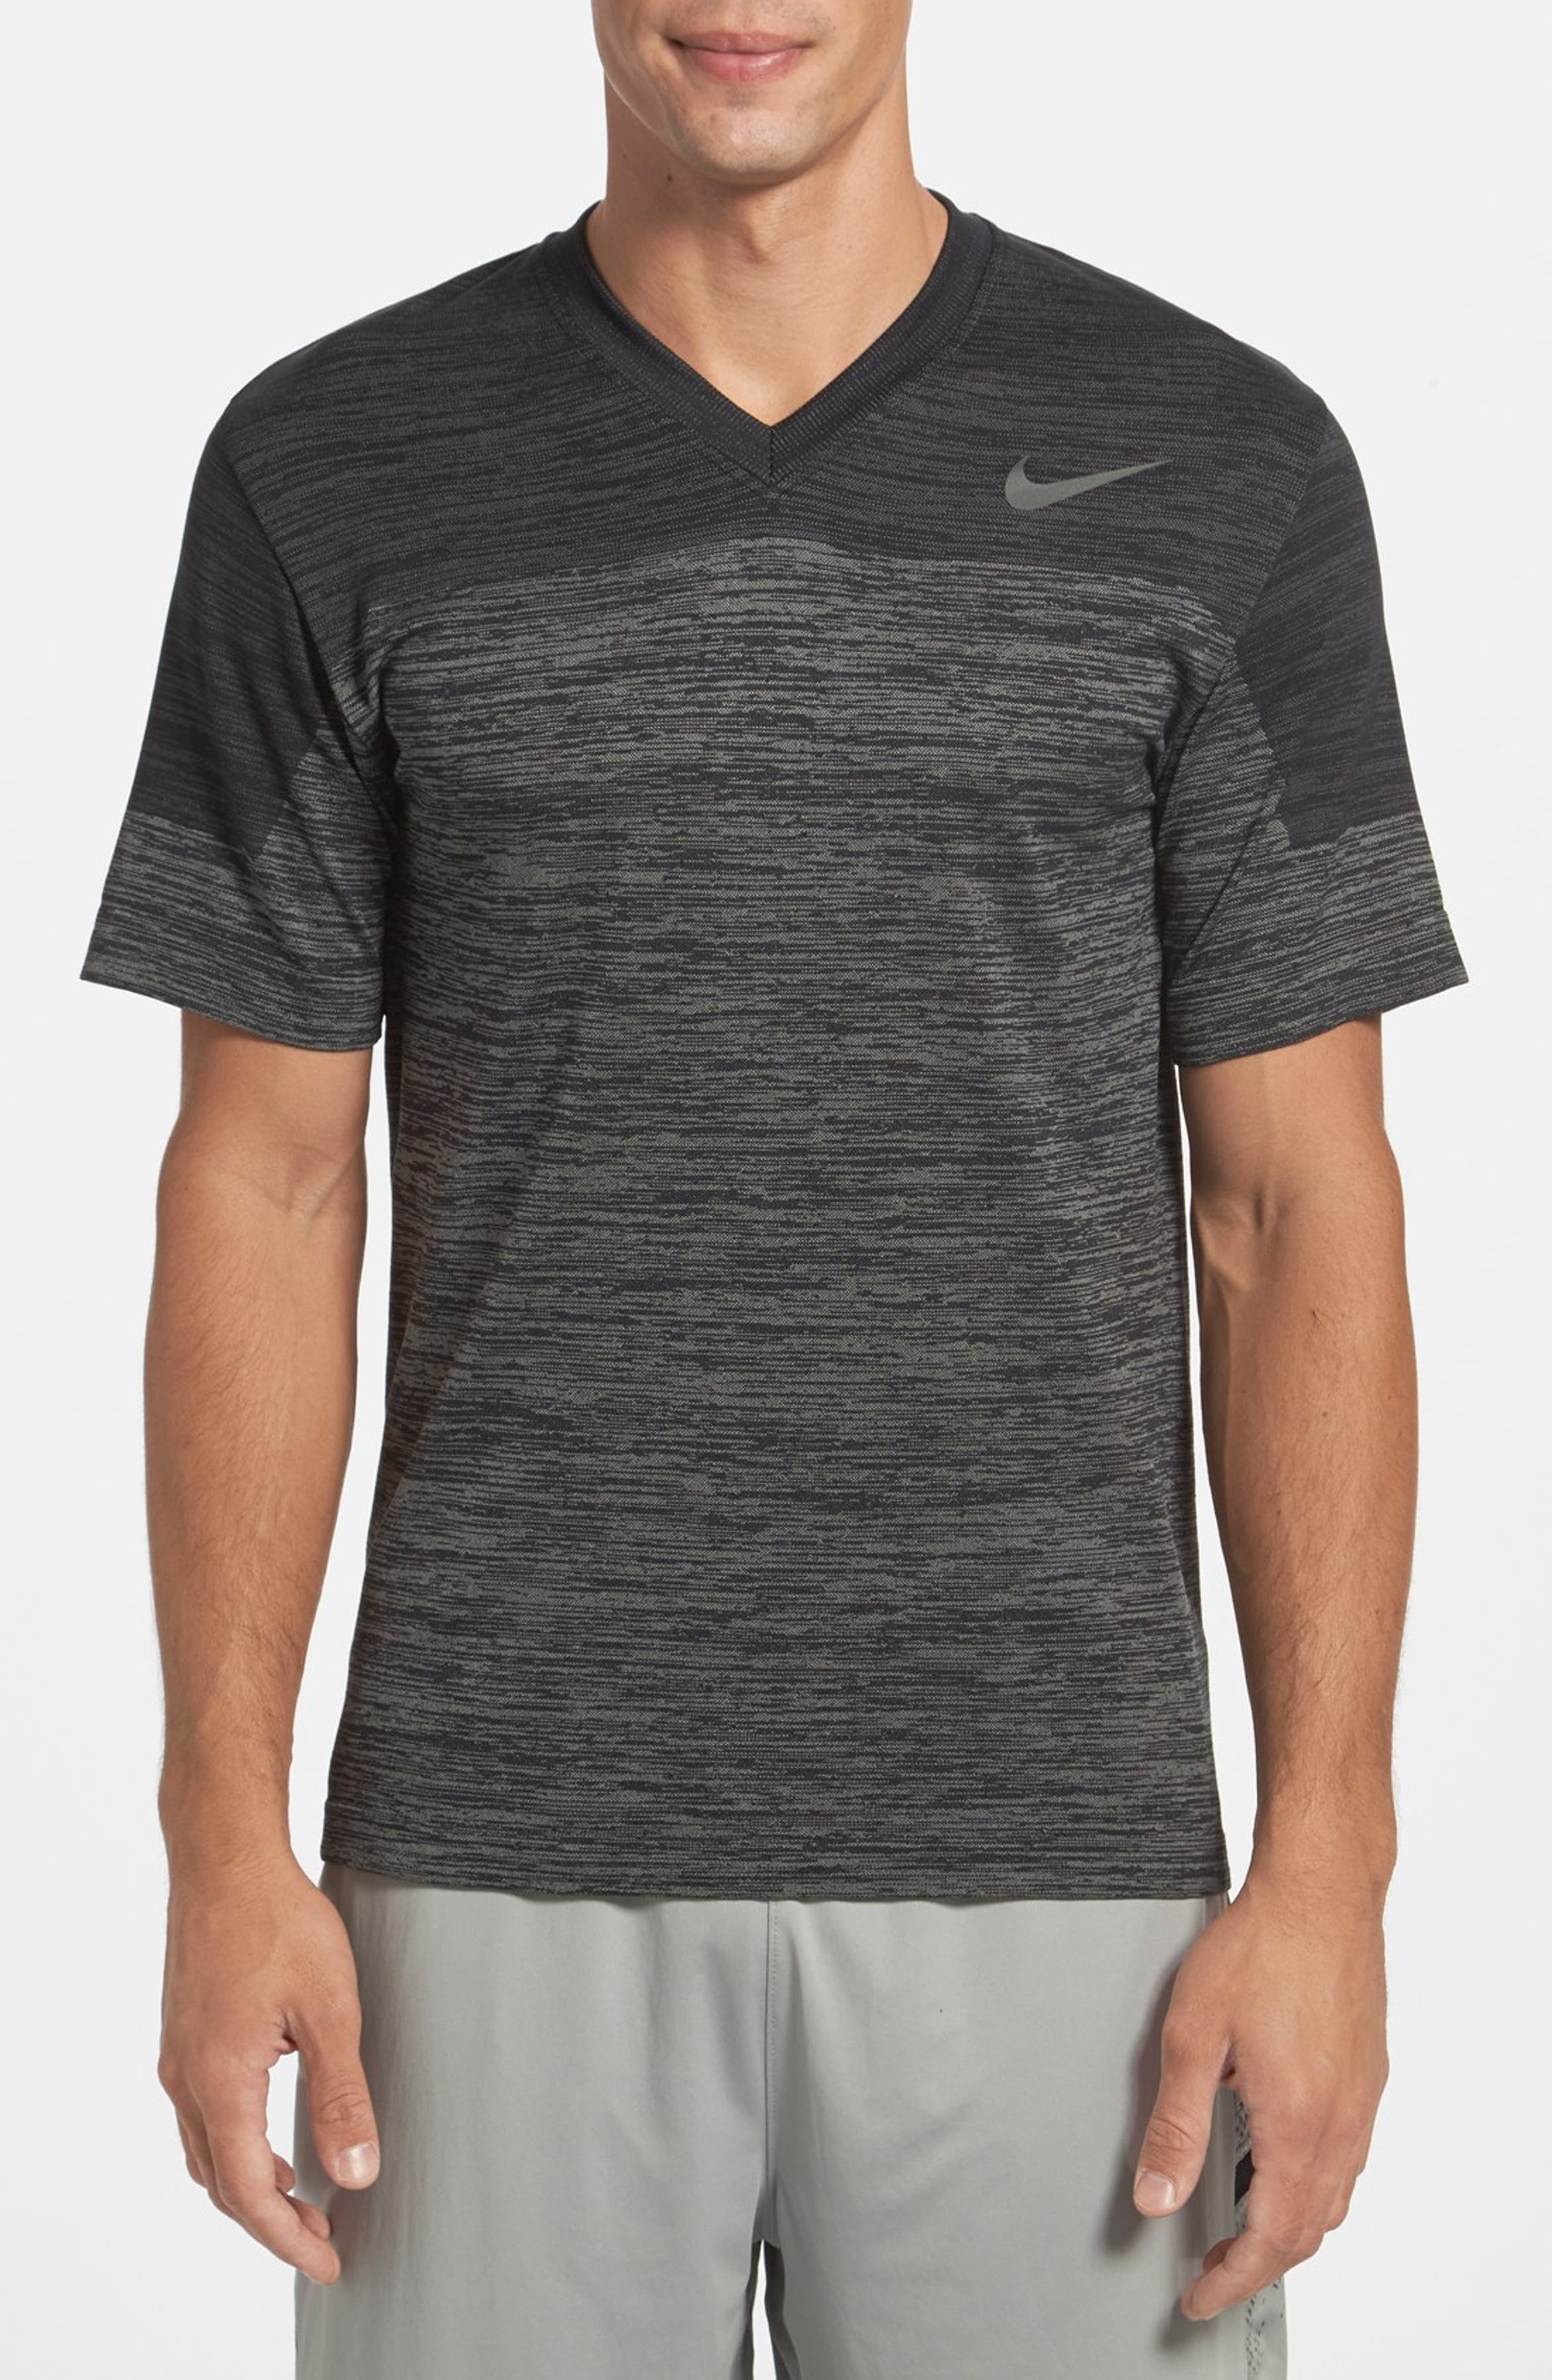 Nike Dri-FIT V-Neck T-Shirt | Nordstrom